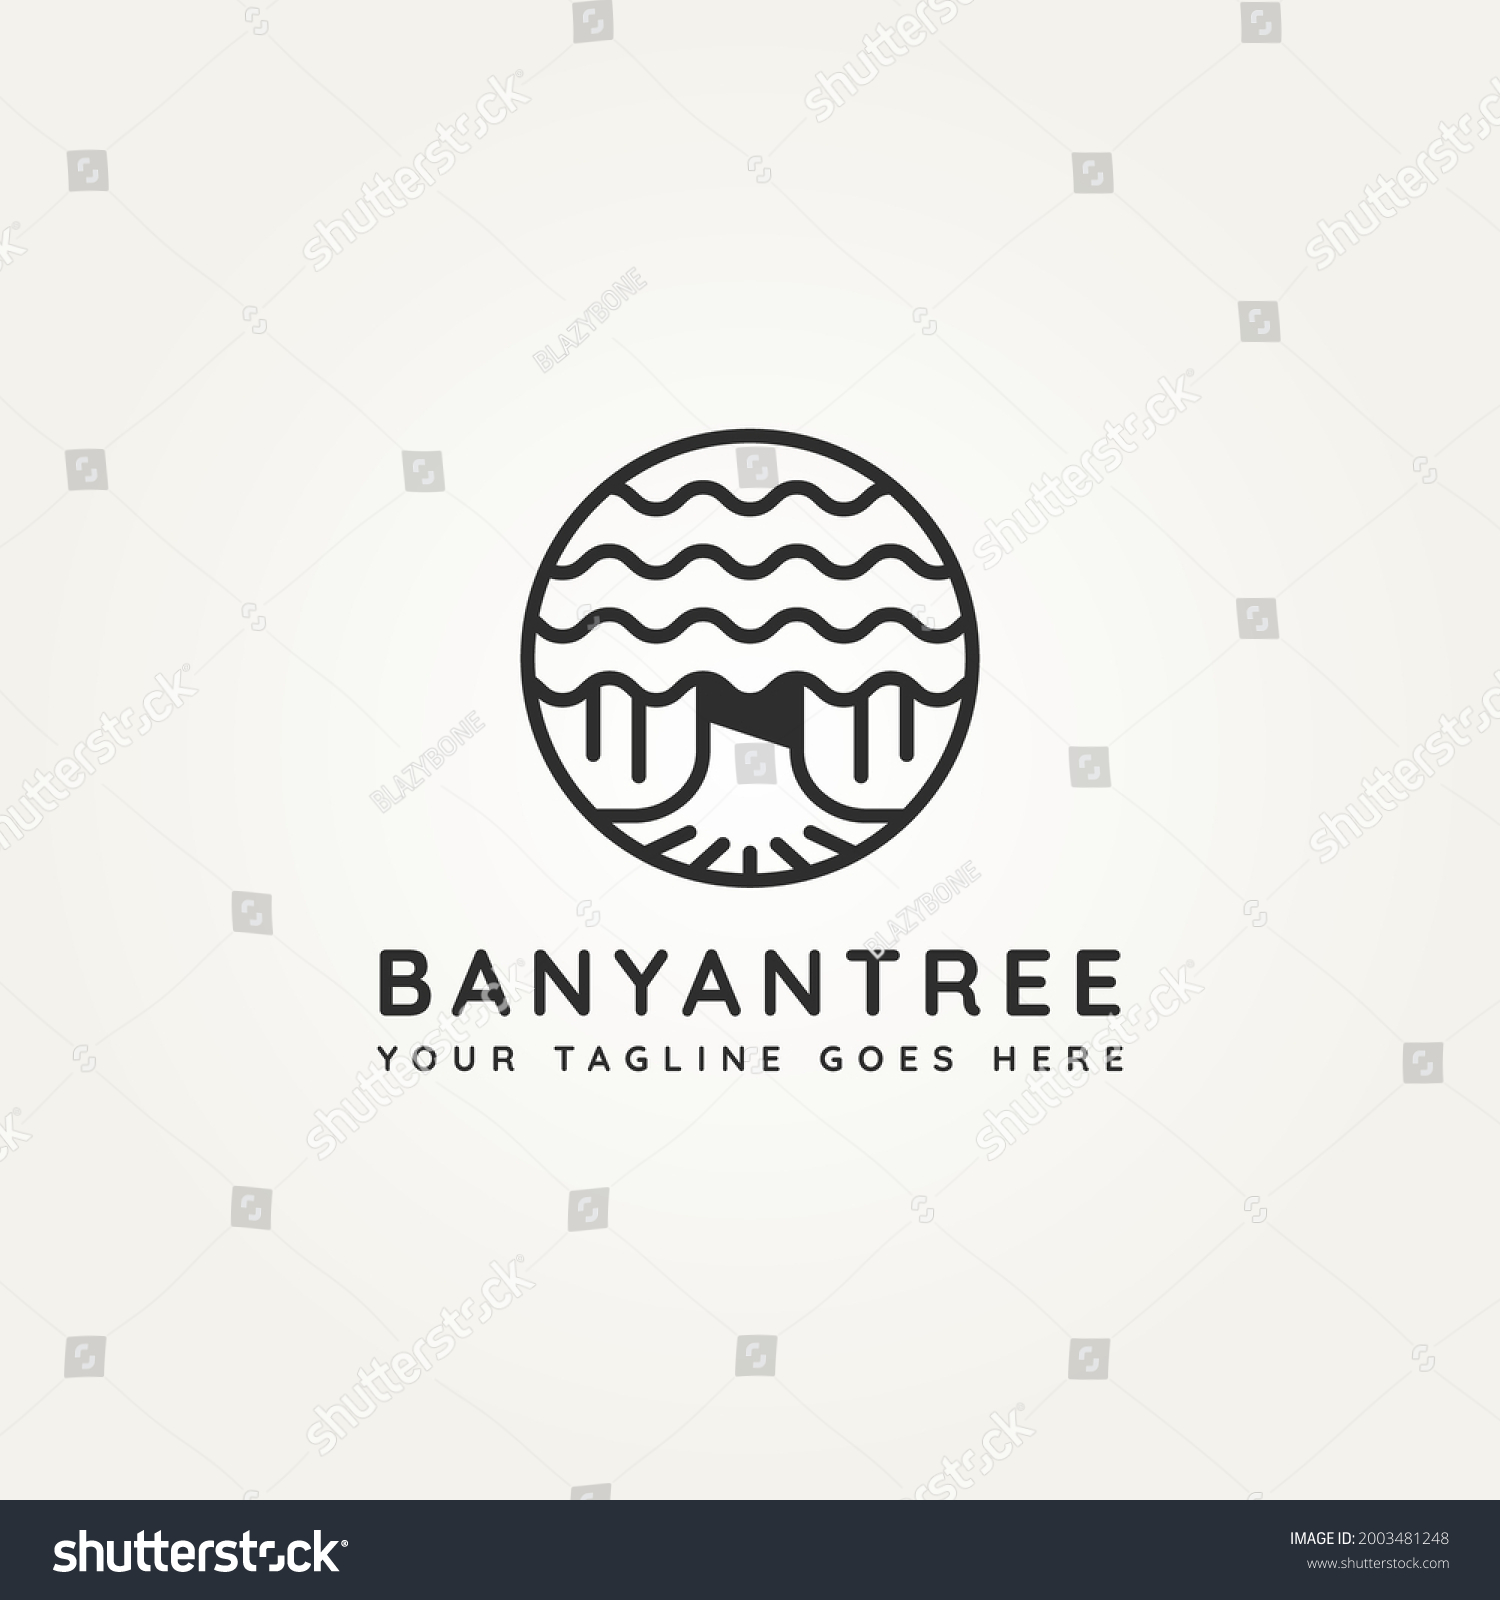 SVG of banyan tree plant minimalist line art icon logo badge template vector illustration design. simple minimalist environment, nature, ecology emblem logo concept inspiration svg